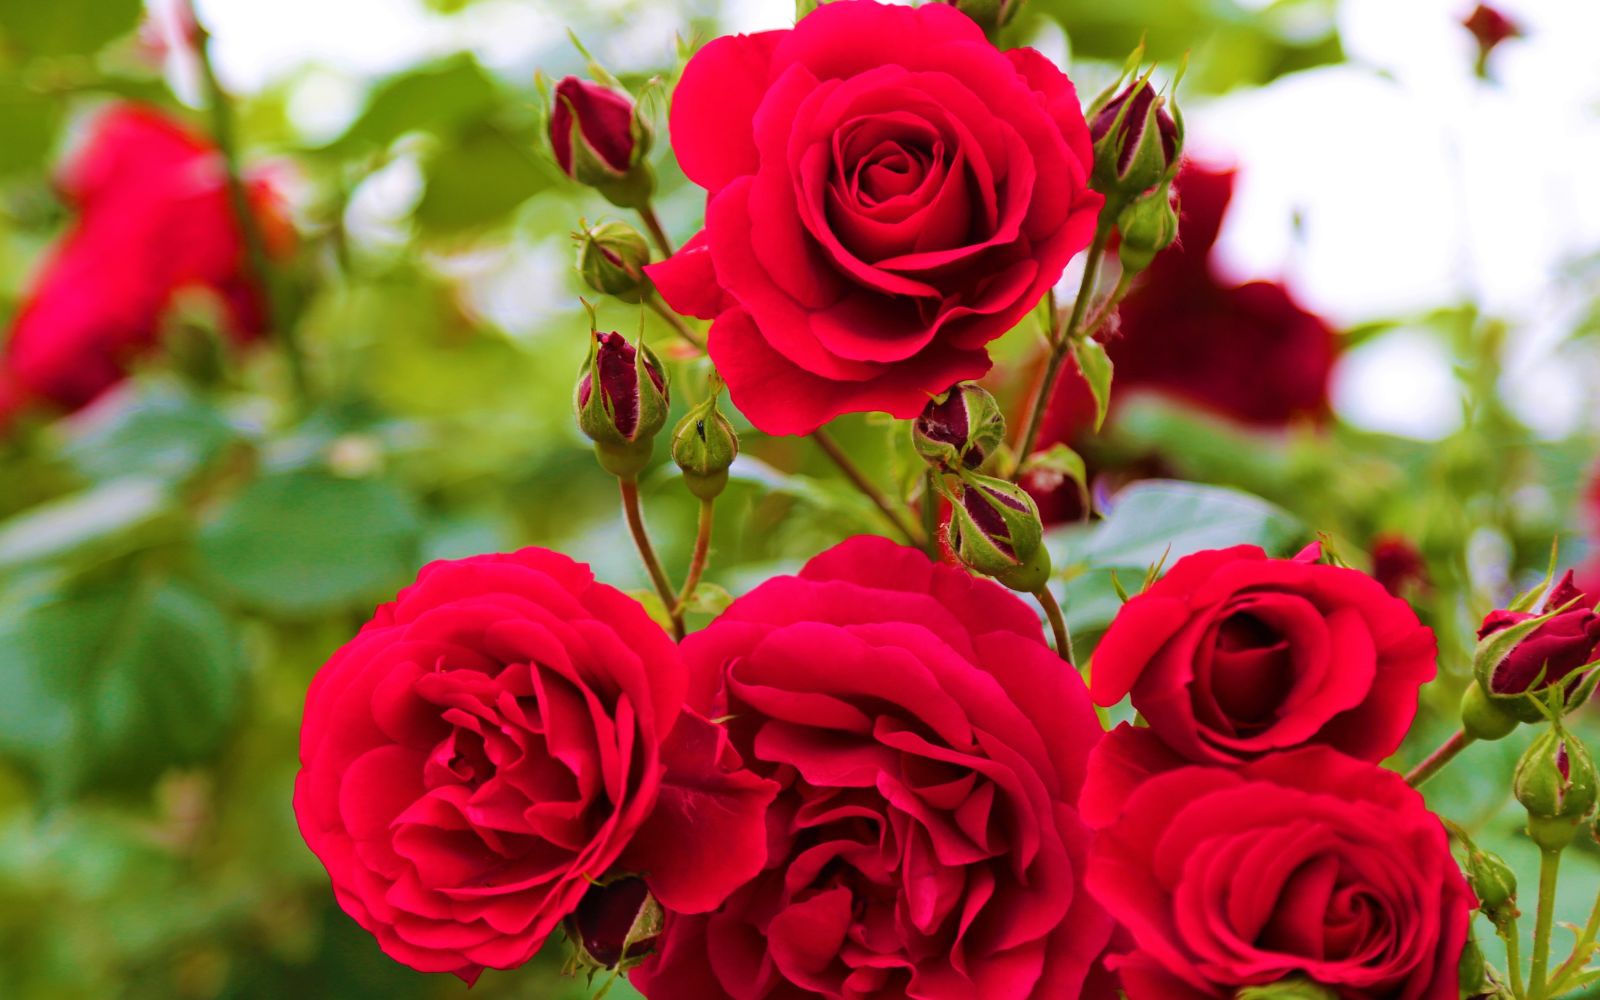 Red Rose in Garden